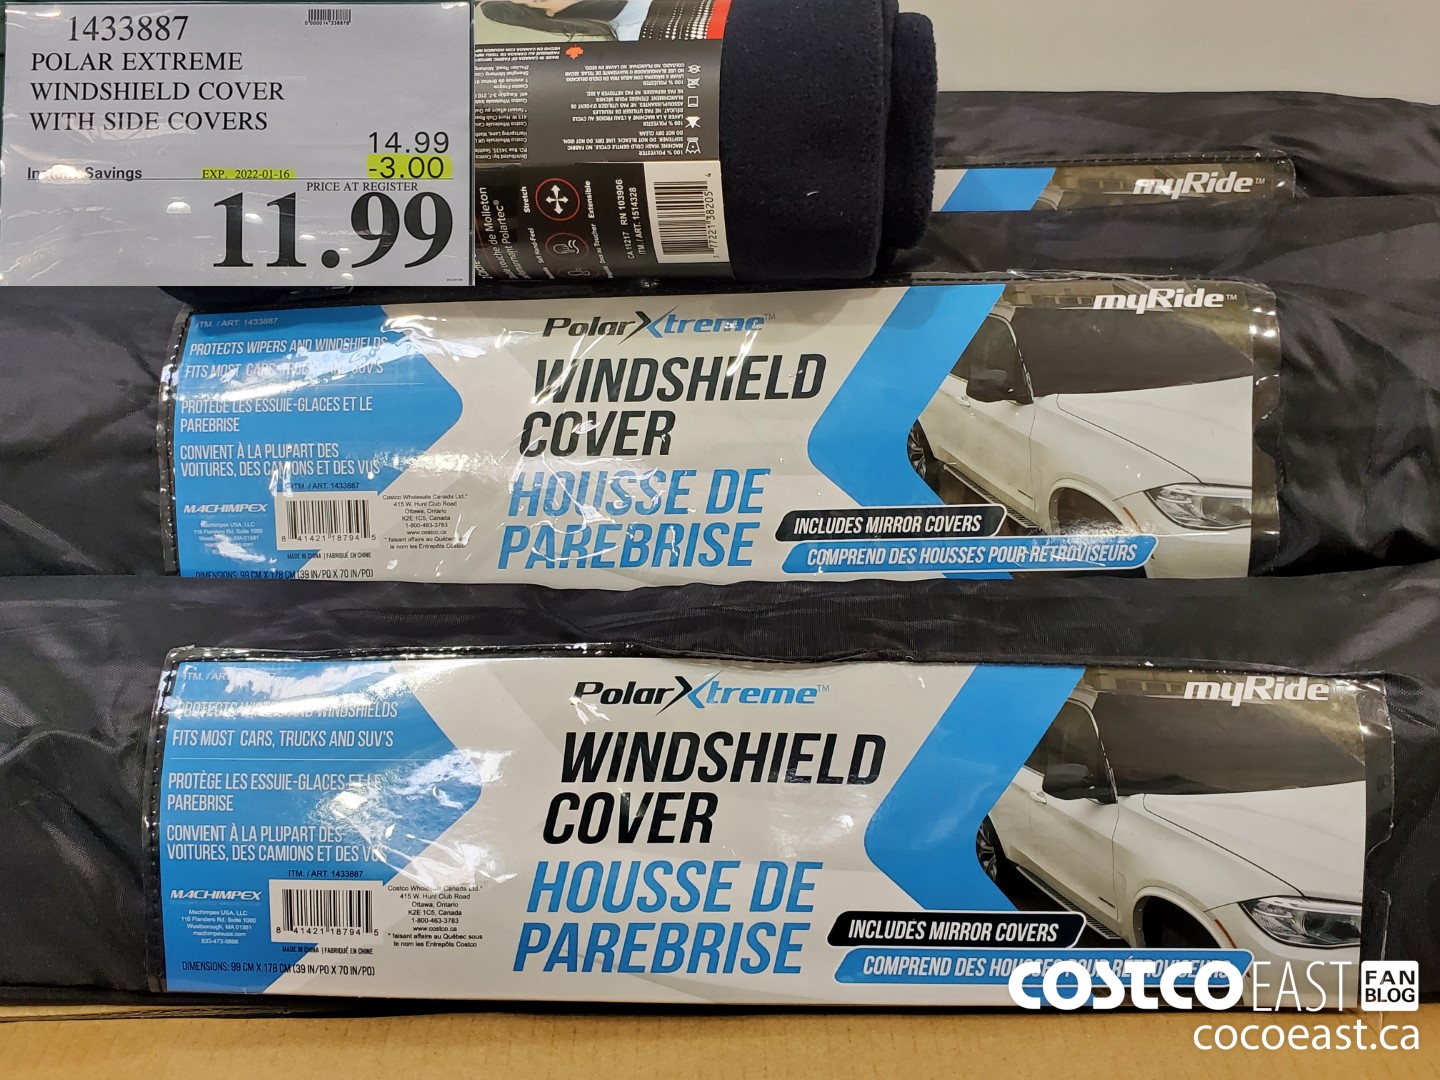 Costco] Polar Extreme Windshield cover $4.97 YMMV in-store